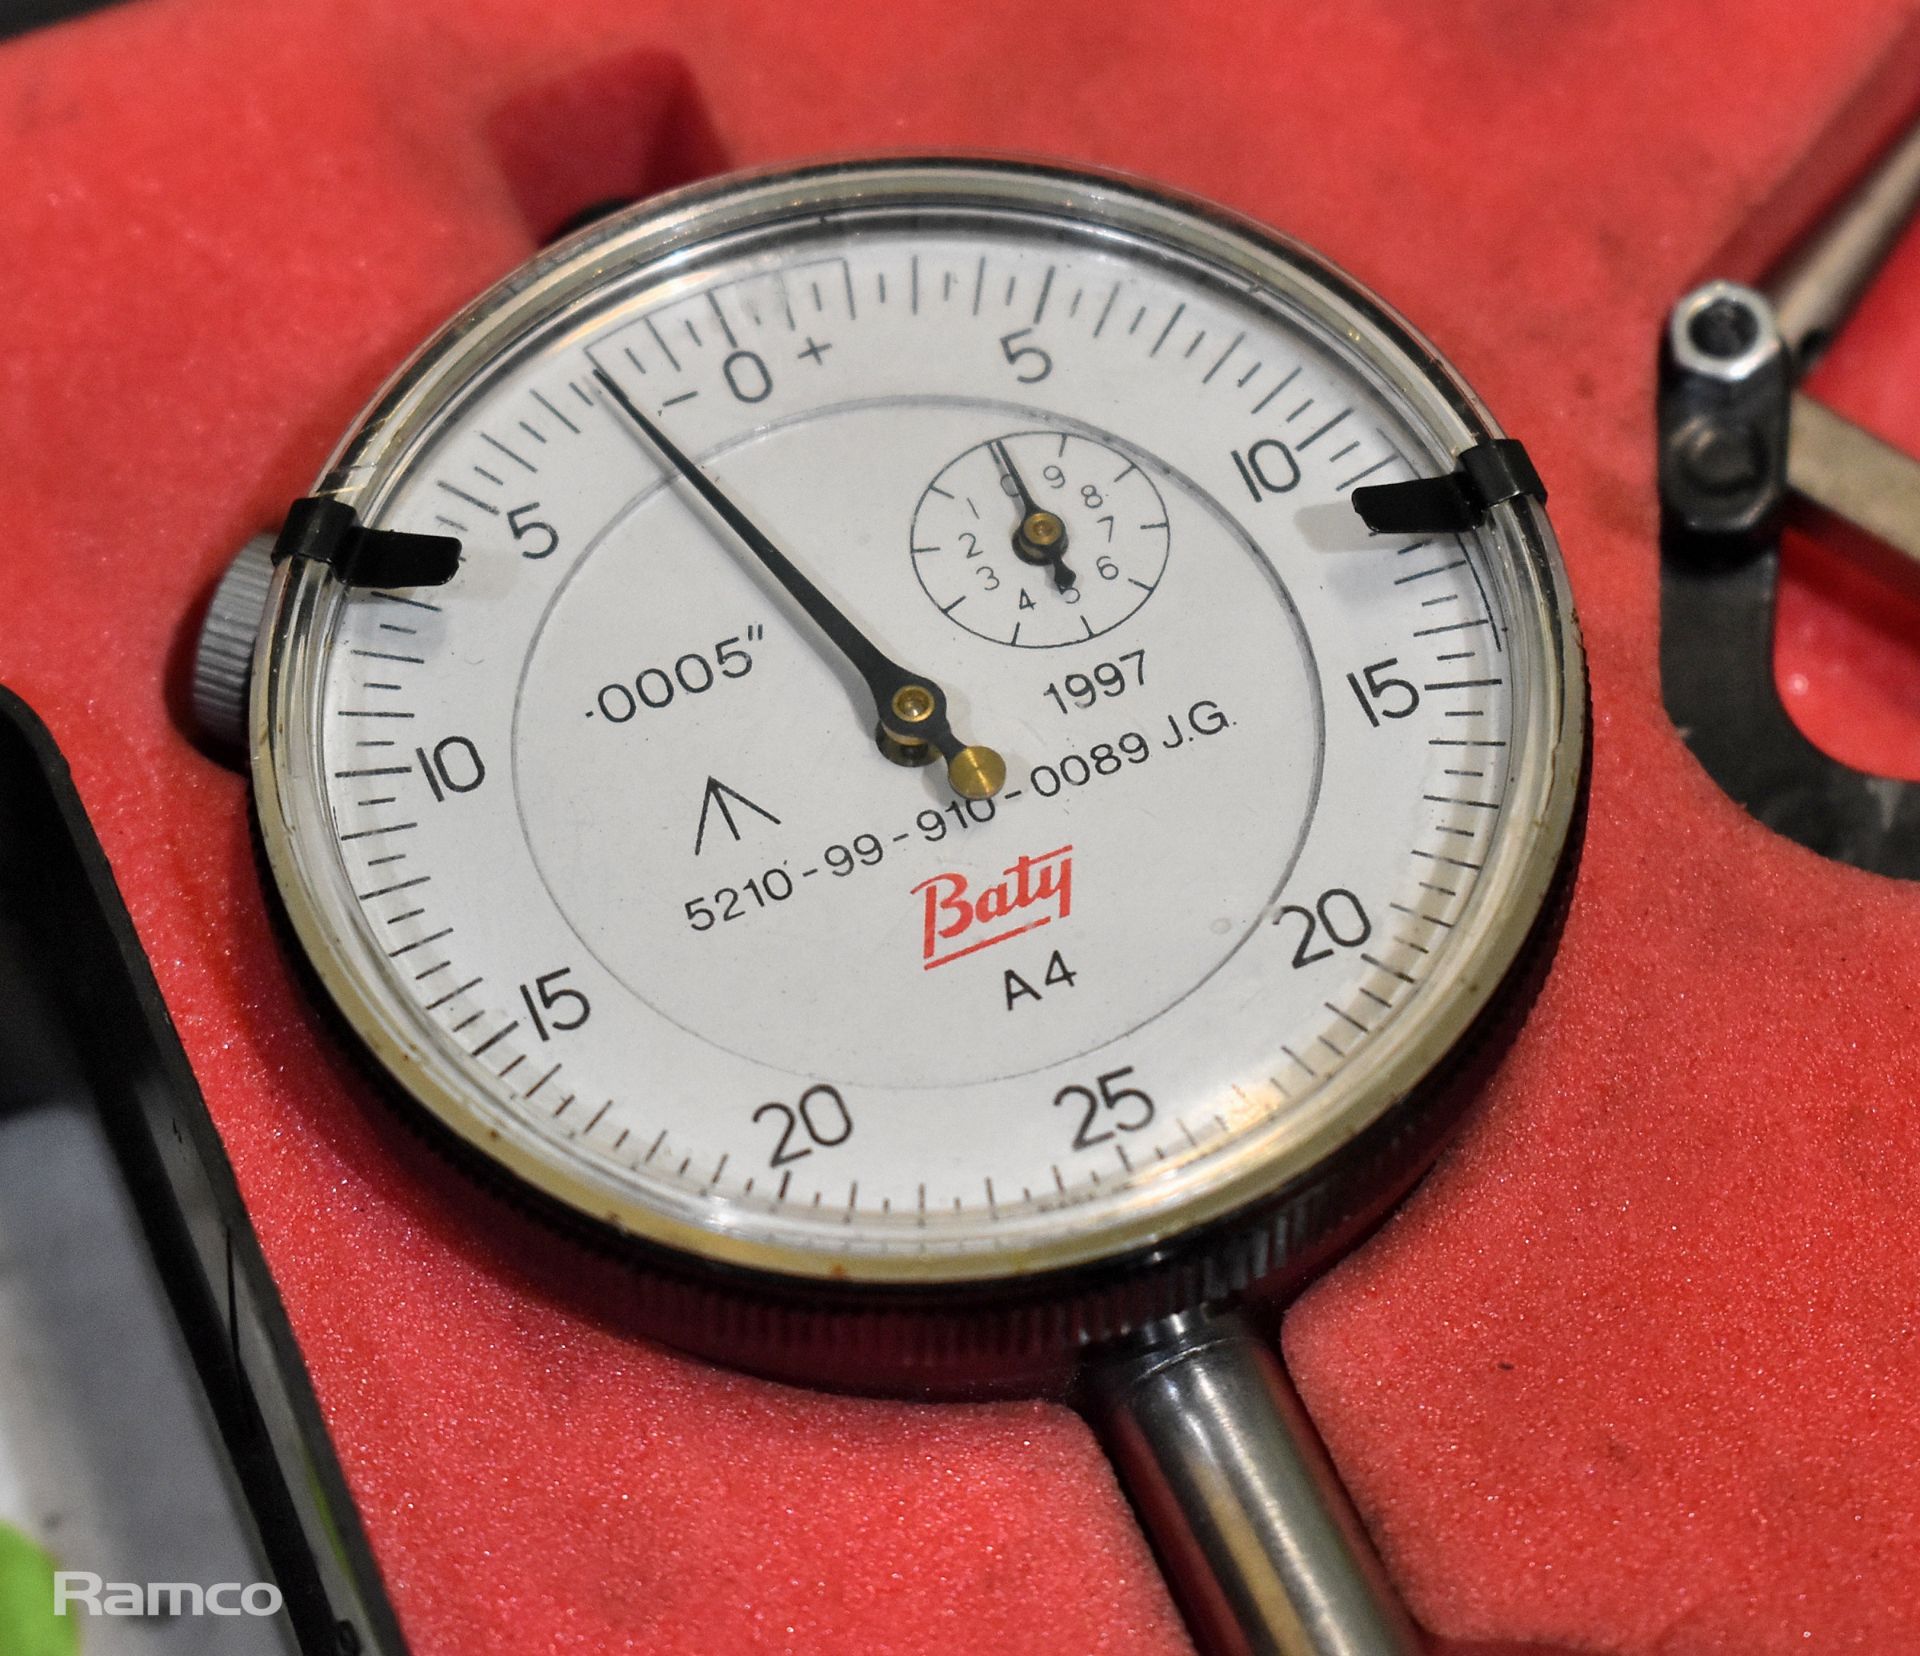 Baty clock gauge dial test indicator kit - Image 3 of 4